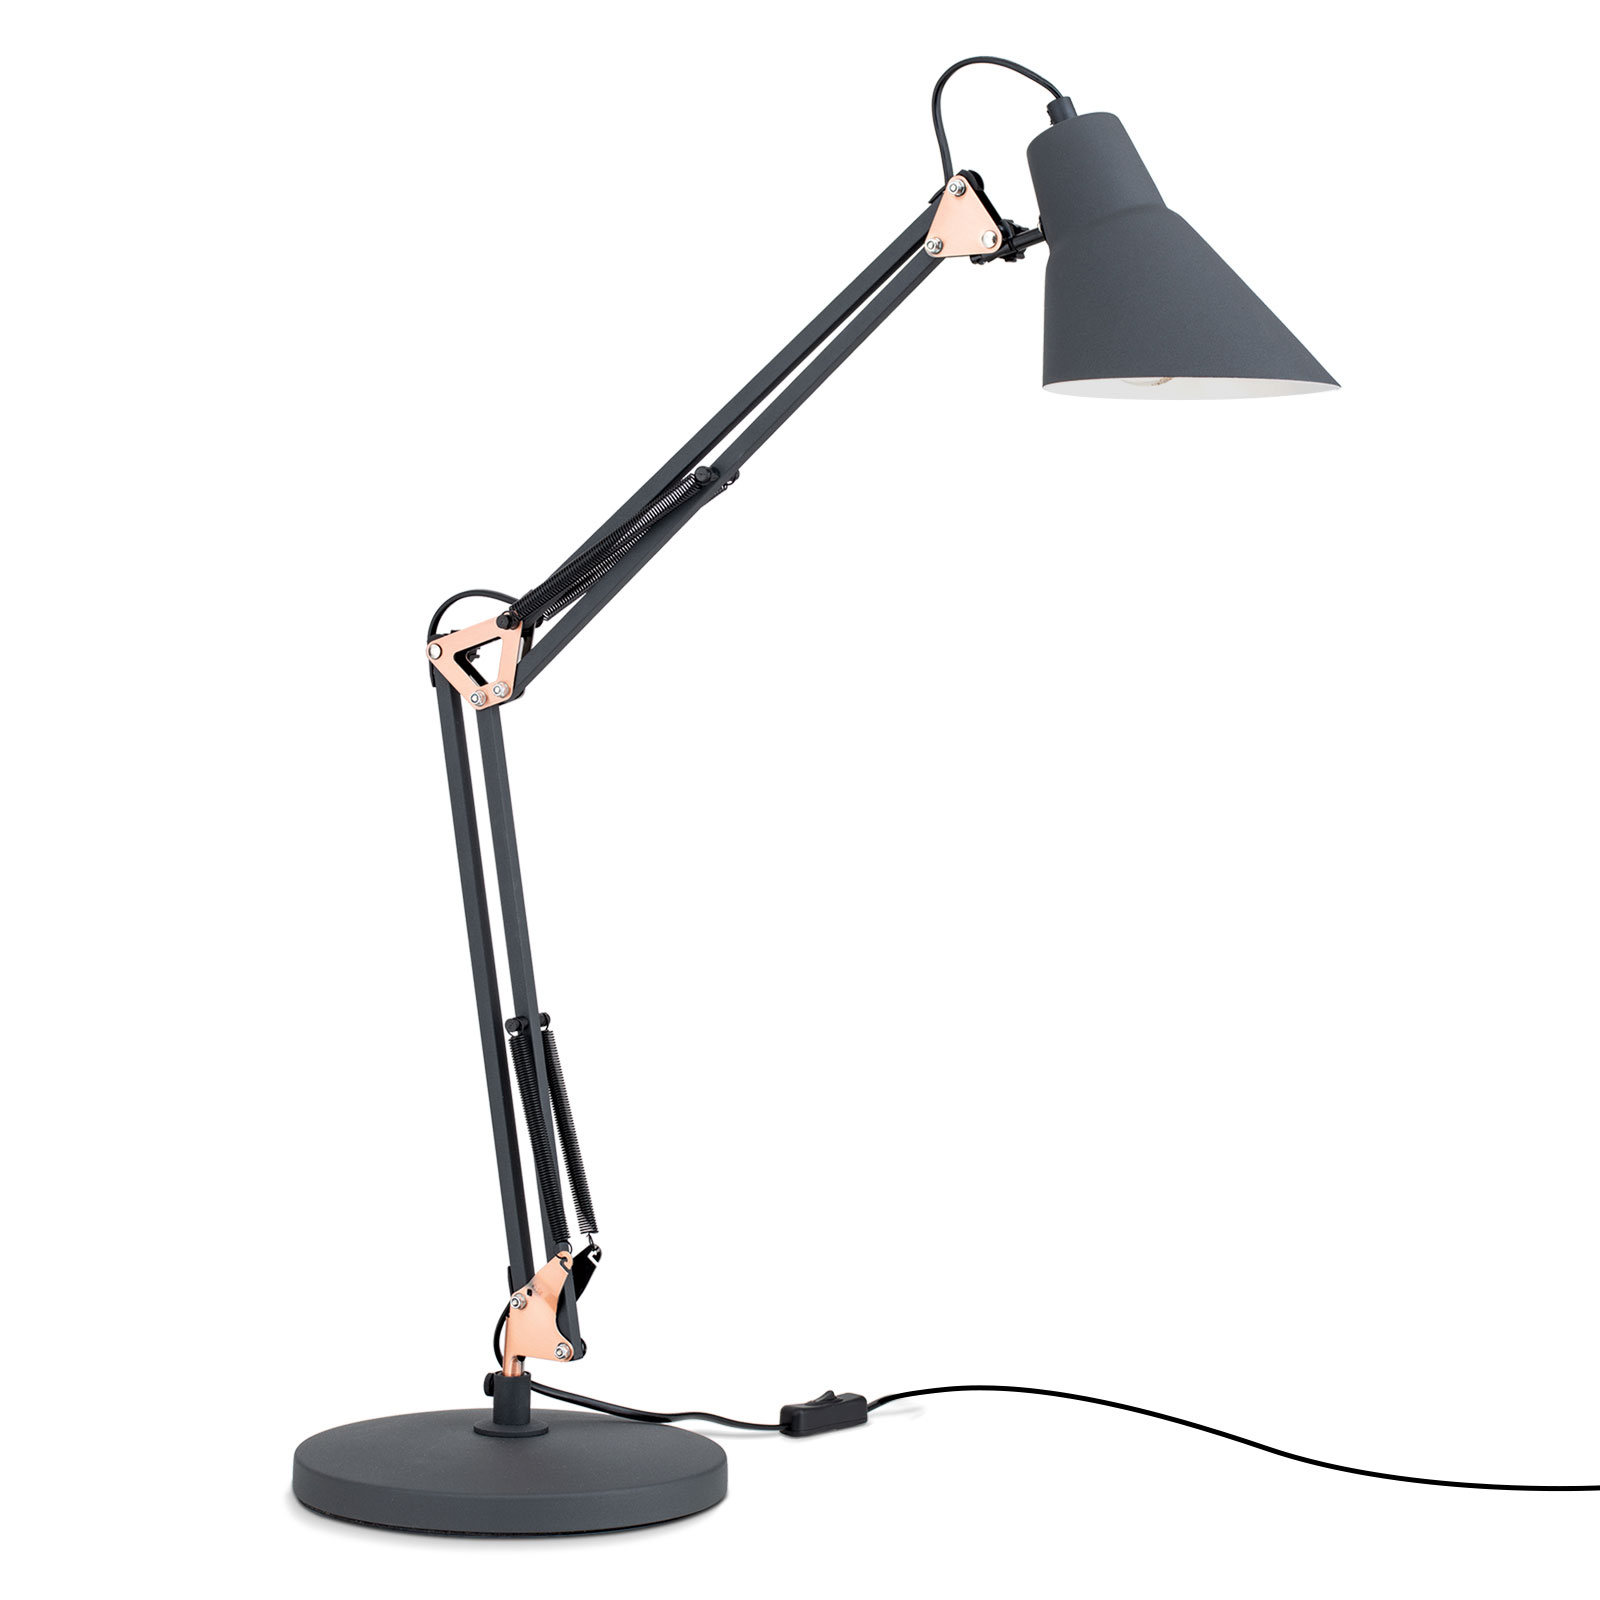 Bachelor table lamp, adjustable in three ways